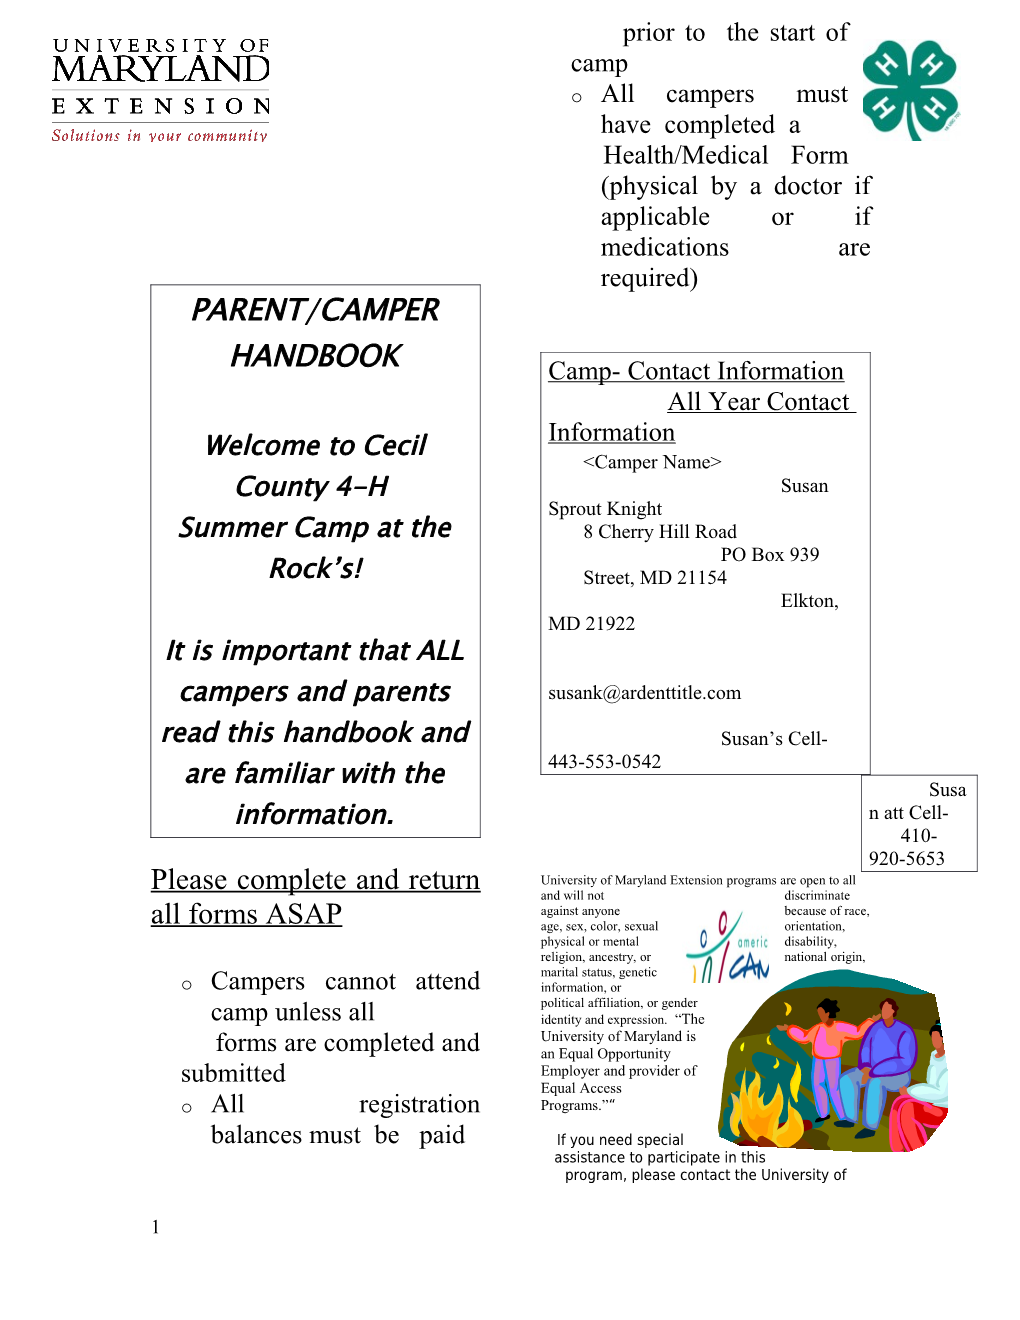 Parent/Camper Handbook